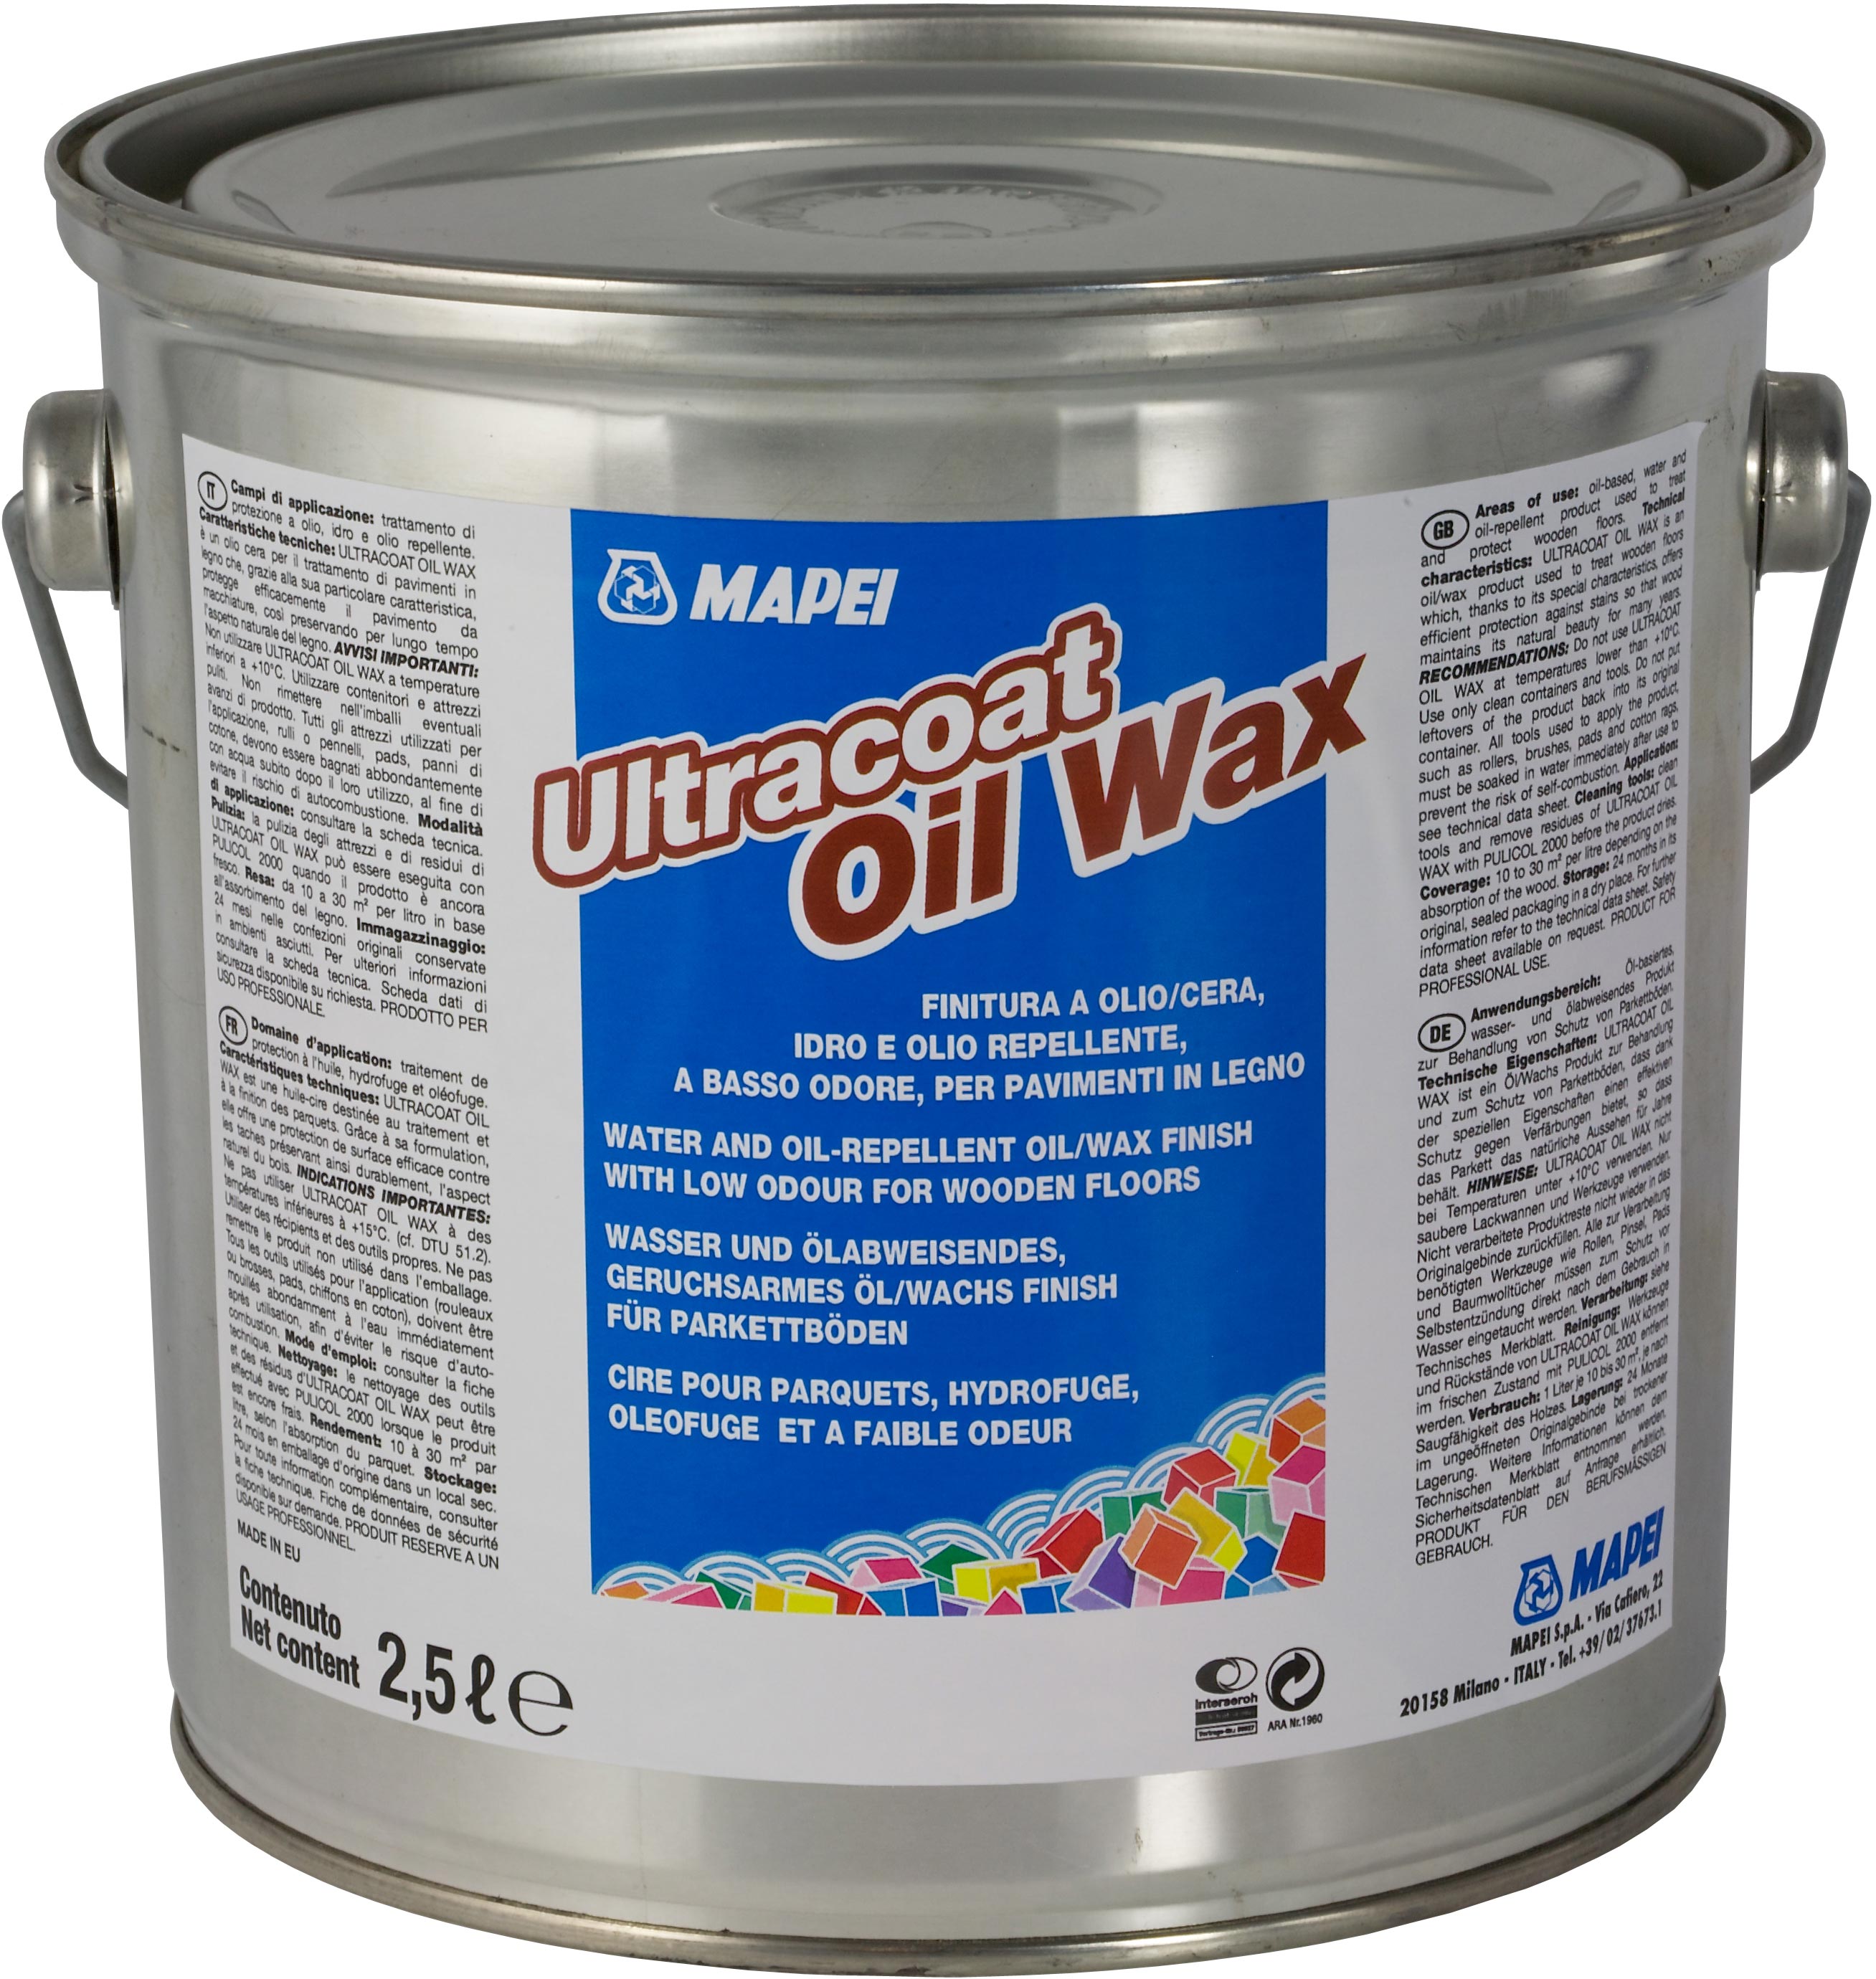 Ultracoat Oil Wax - Kanister à 2.5 l